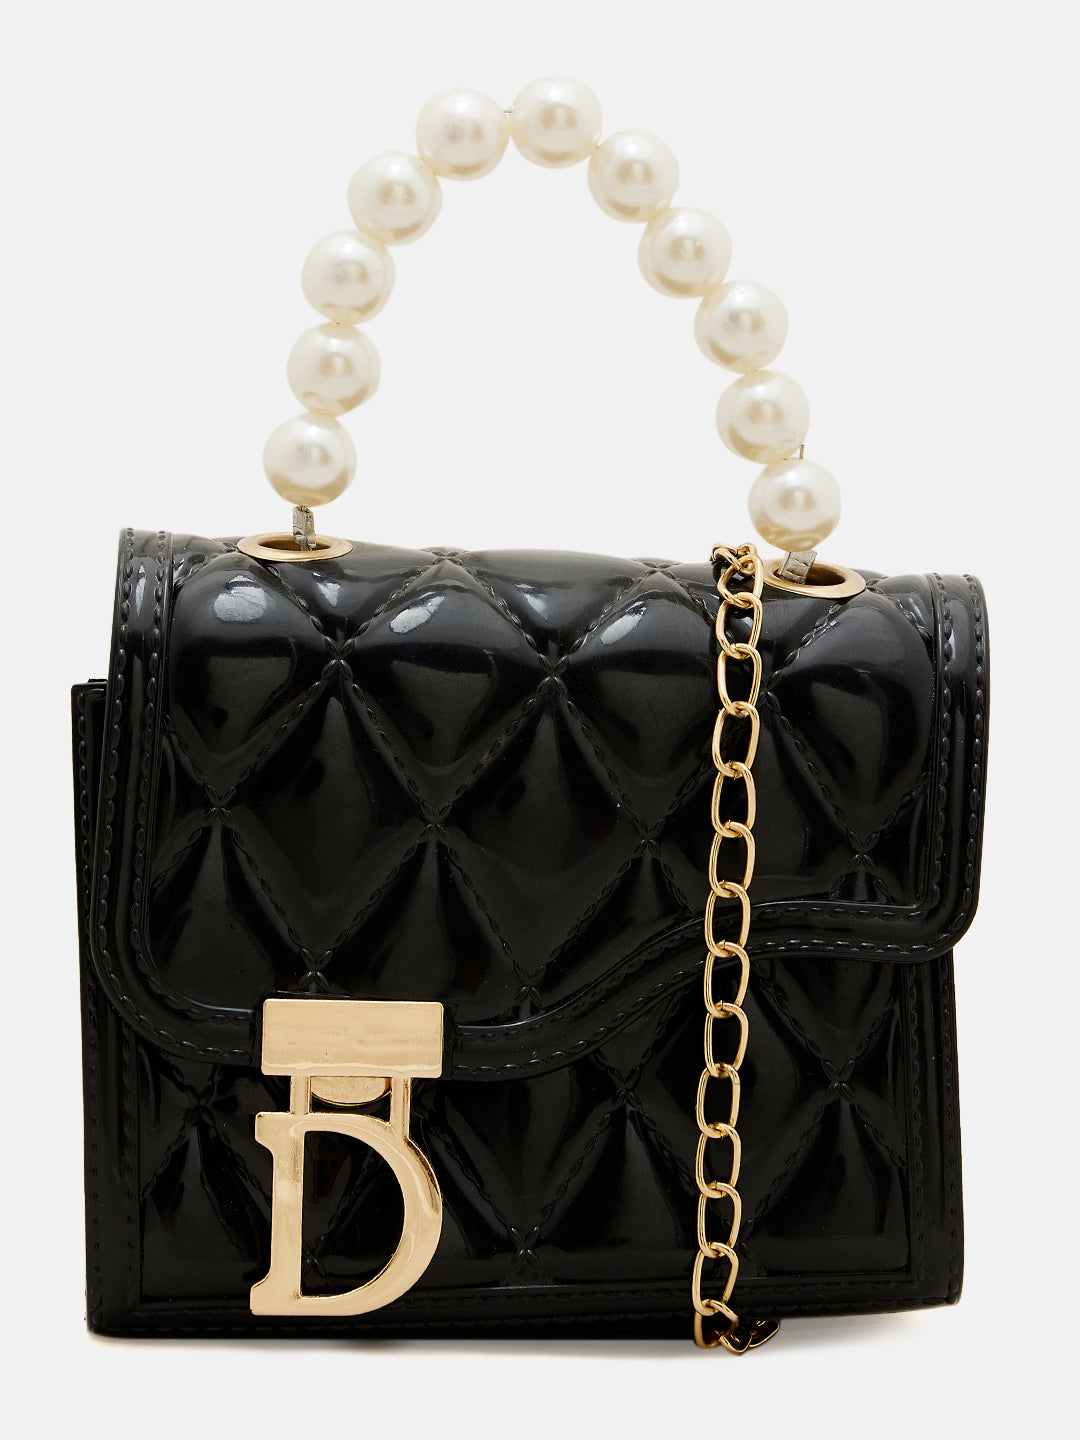 Athena Black Textured Structured Handheld Bag - Athena Lifestyle